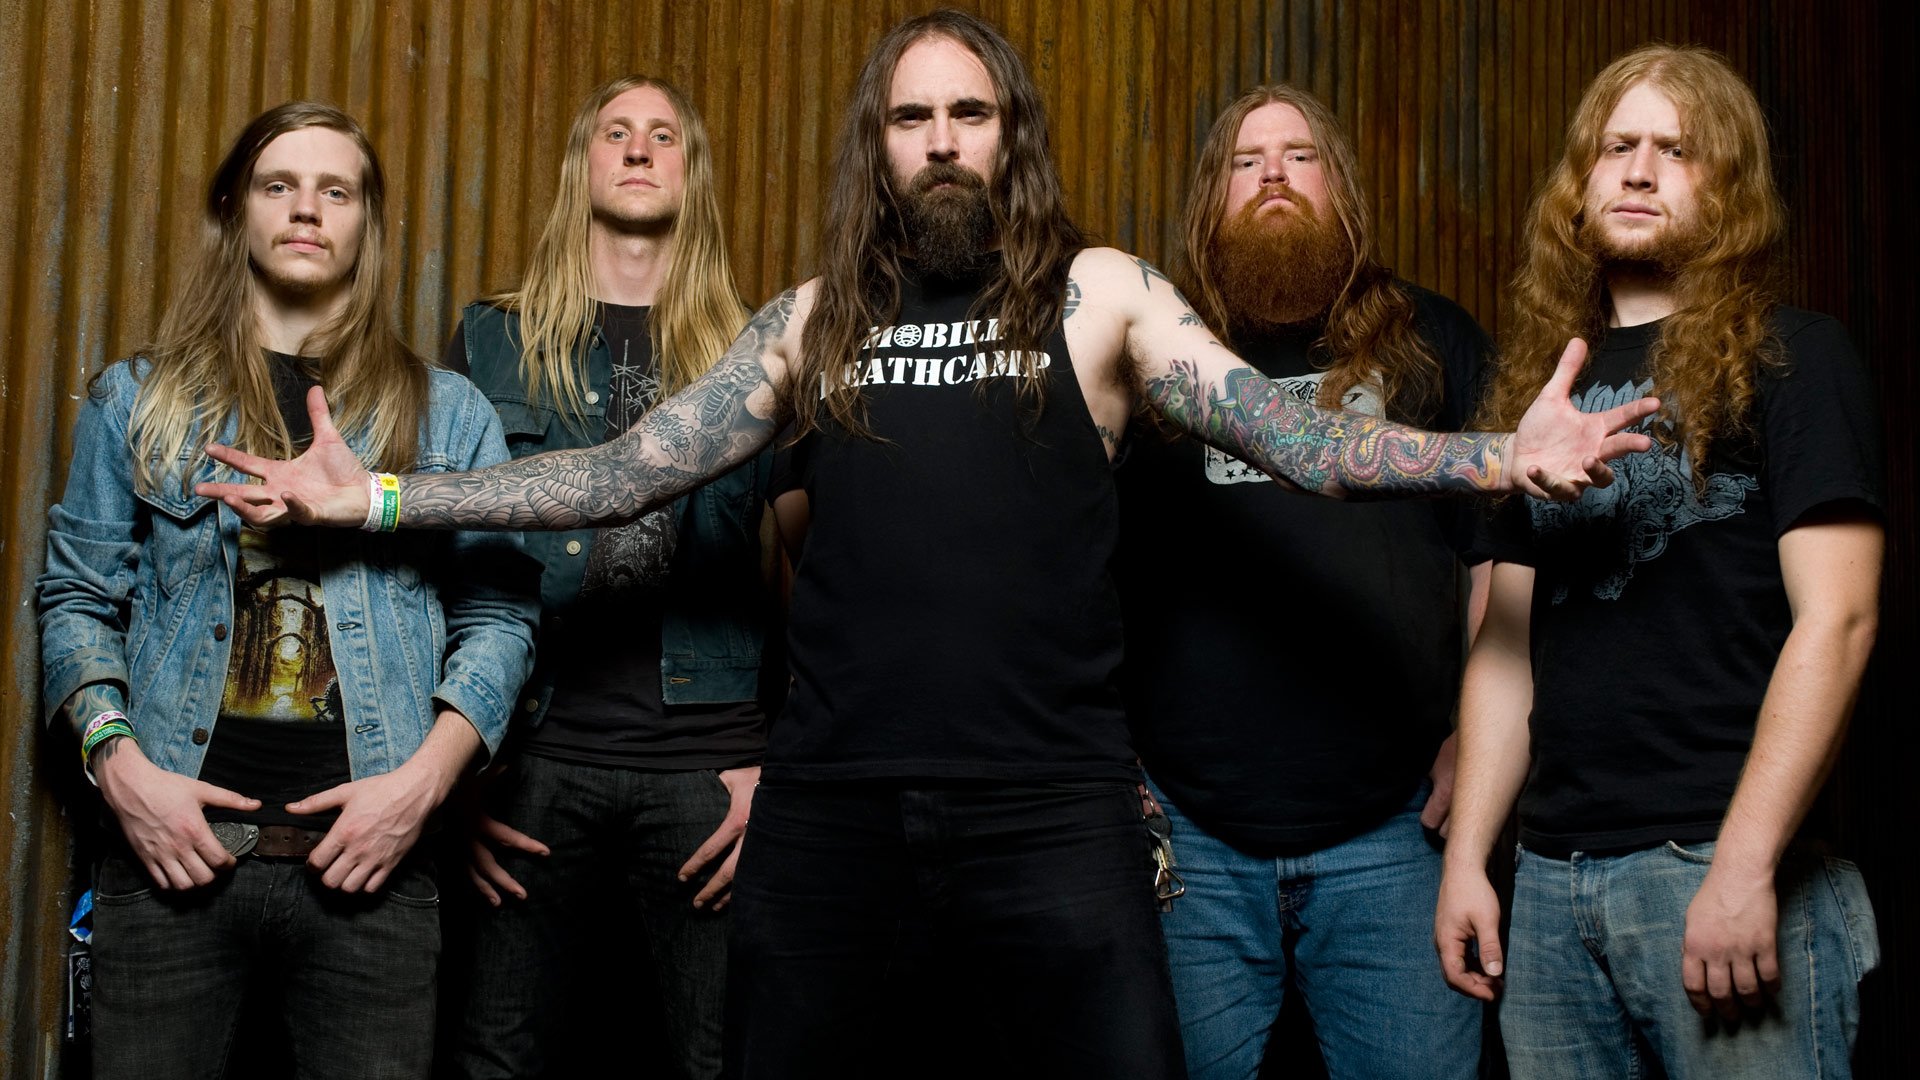 Metal usa. Группа Skeletonwitch. Unleashed шведская группа. Трэш метал. Skeletonwitch группа фотографии.